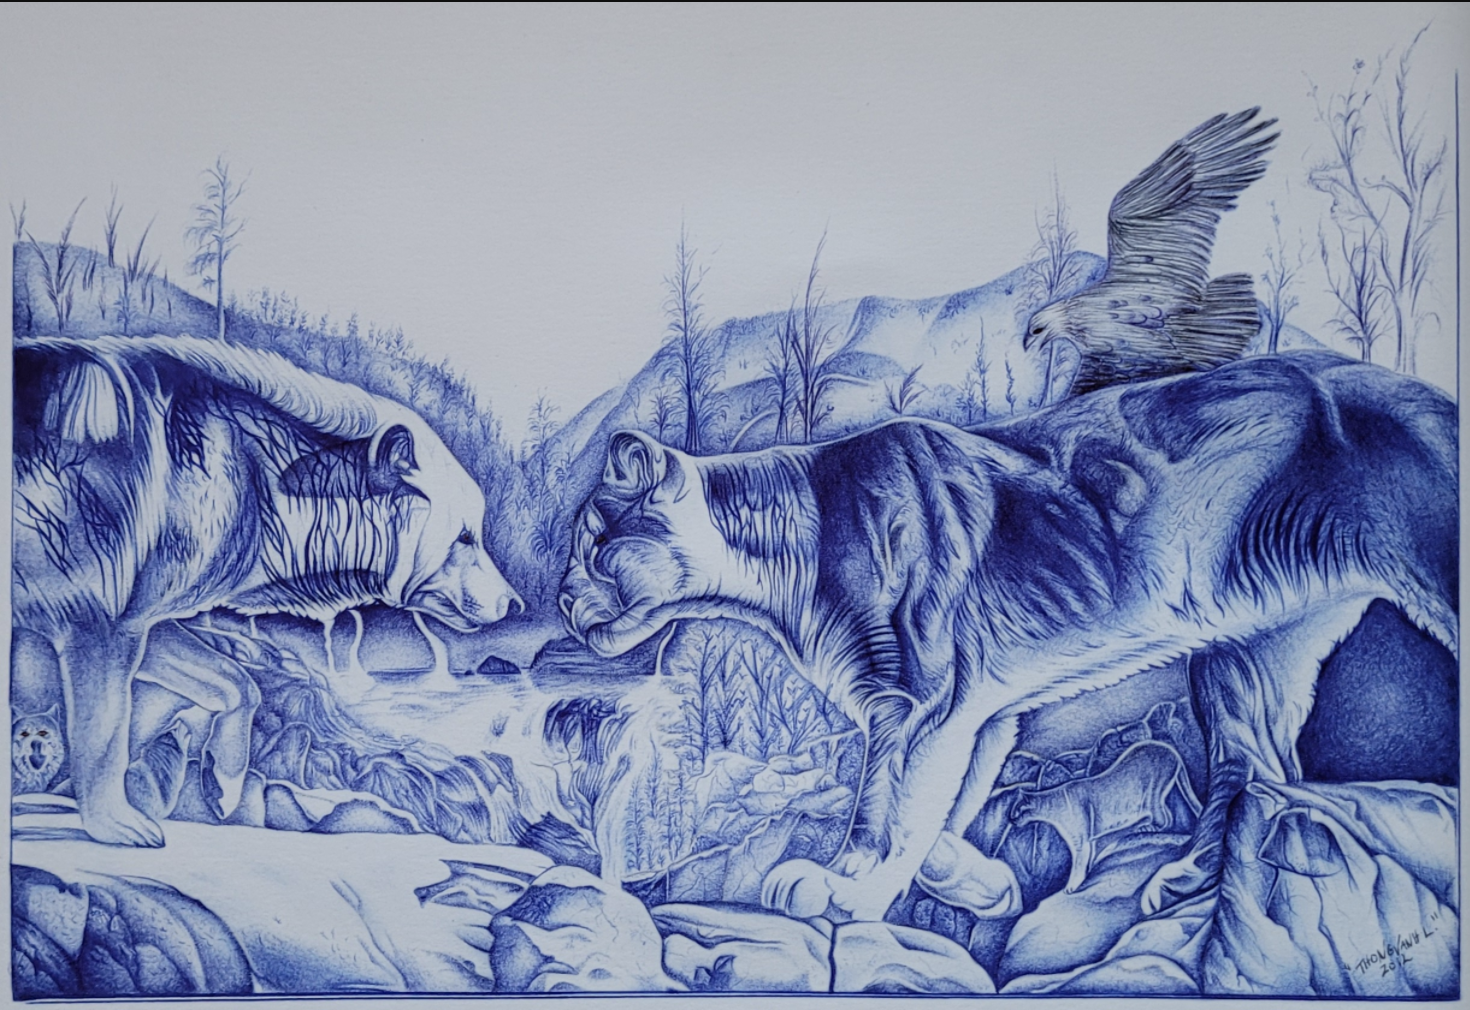 Blue pen drawing of a mountain lion facing a bear in a mountainous scene